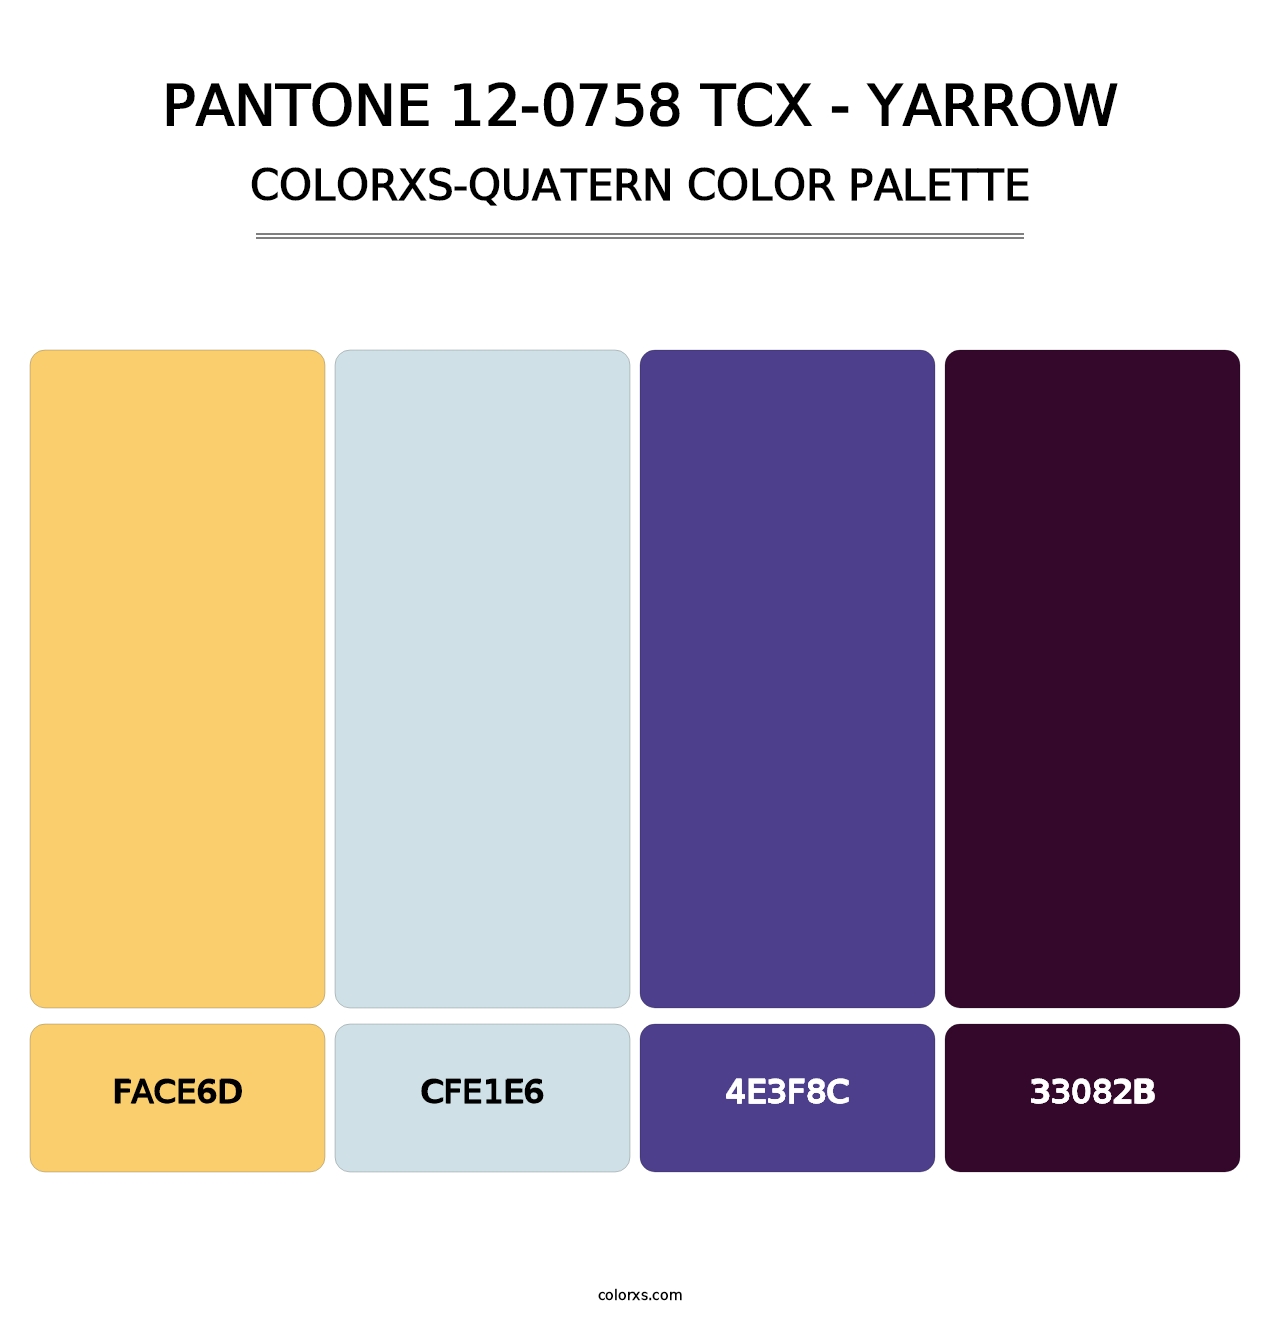 PANTONE 12-0758 TCX - Yarrow - Colorxs Quatern Palette